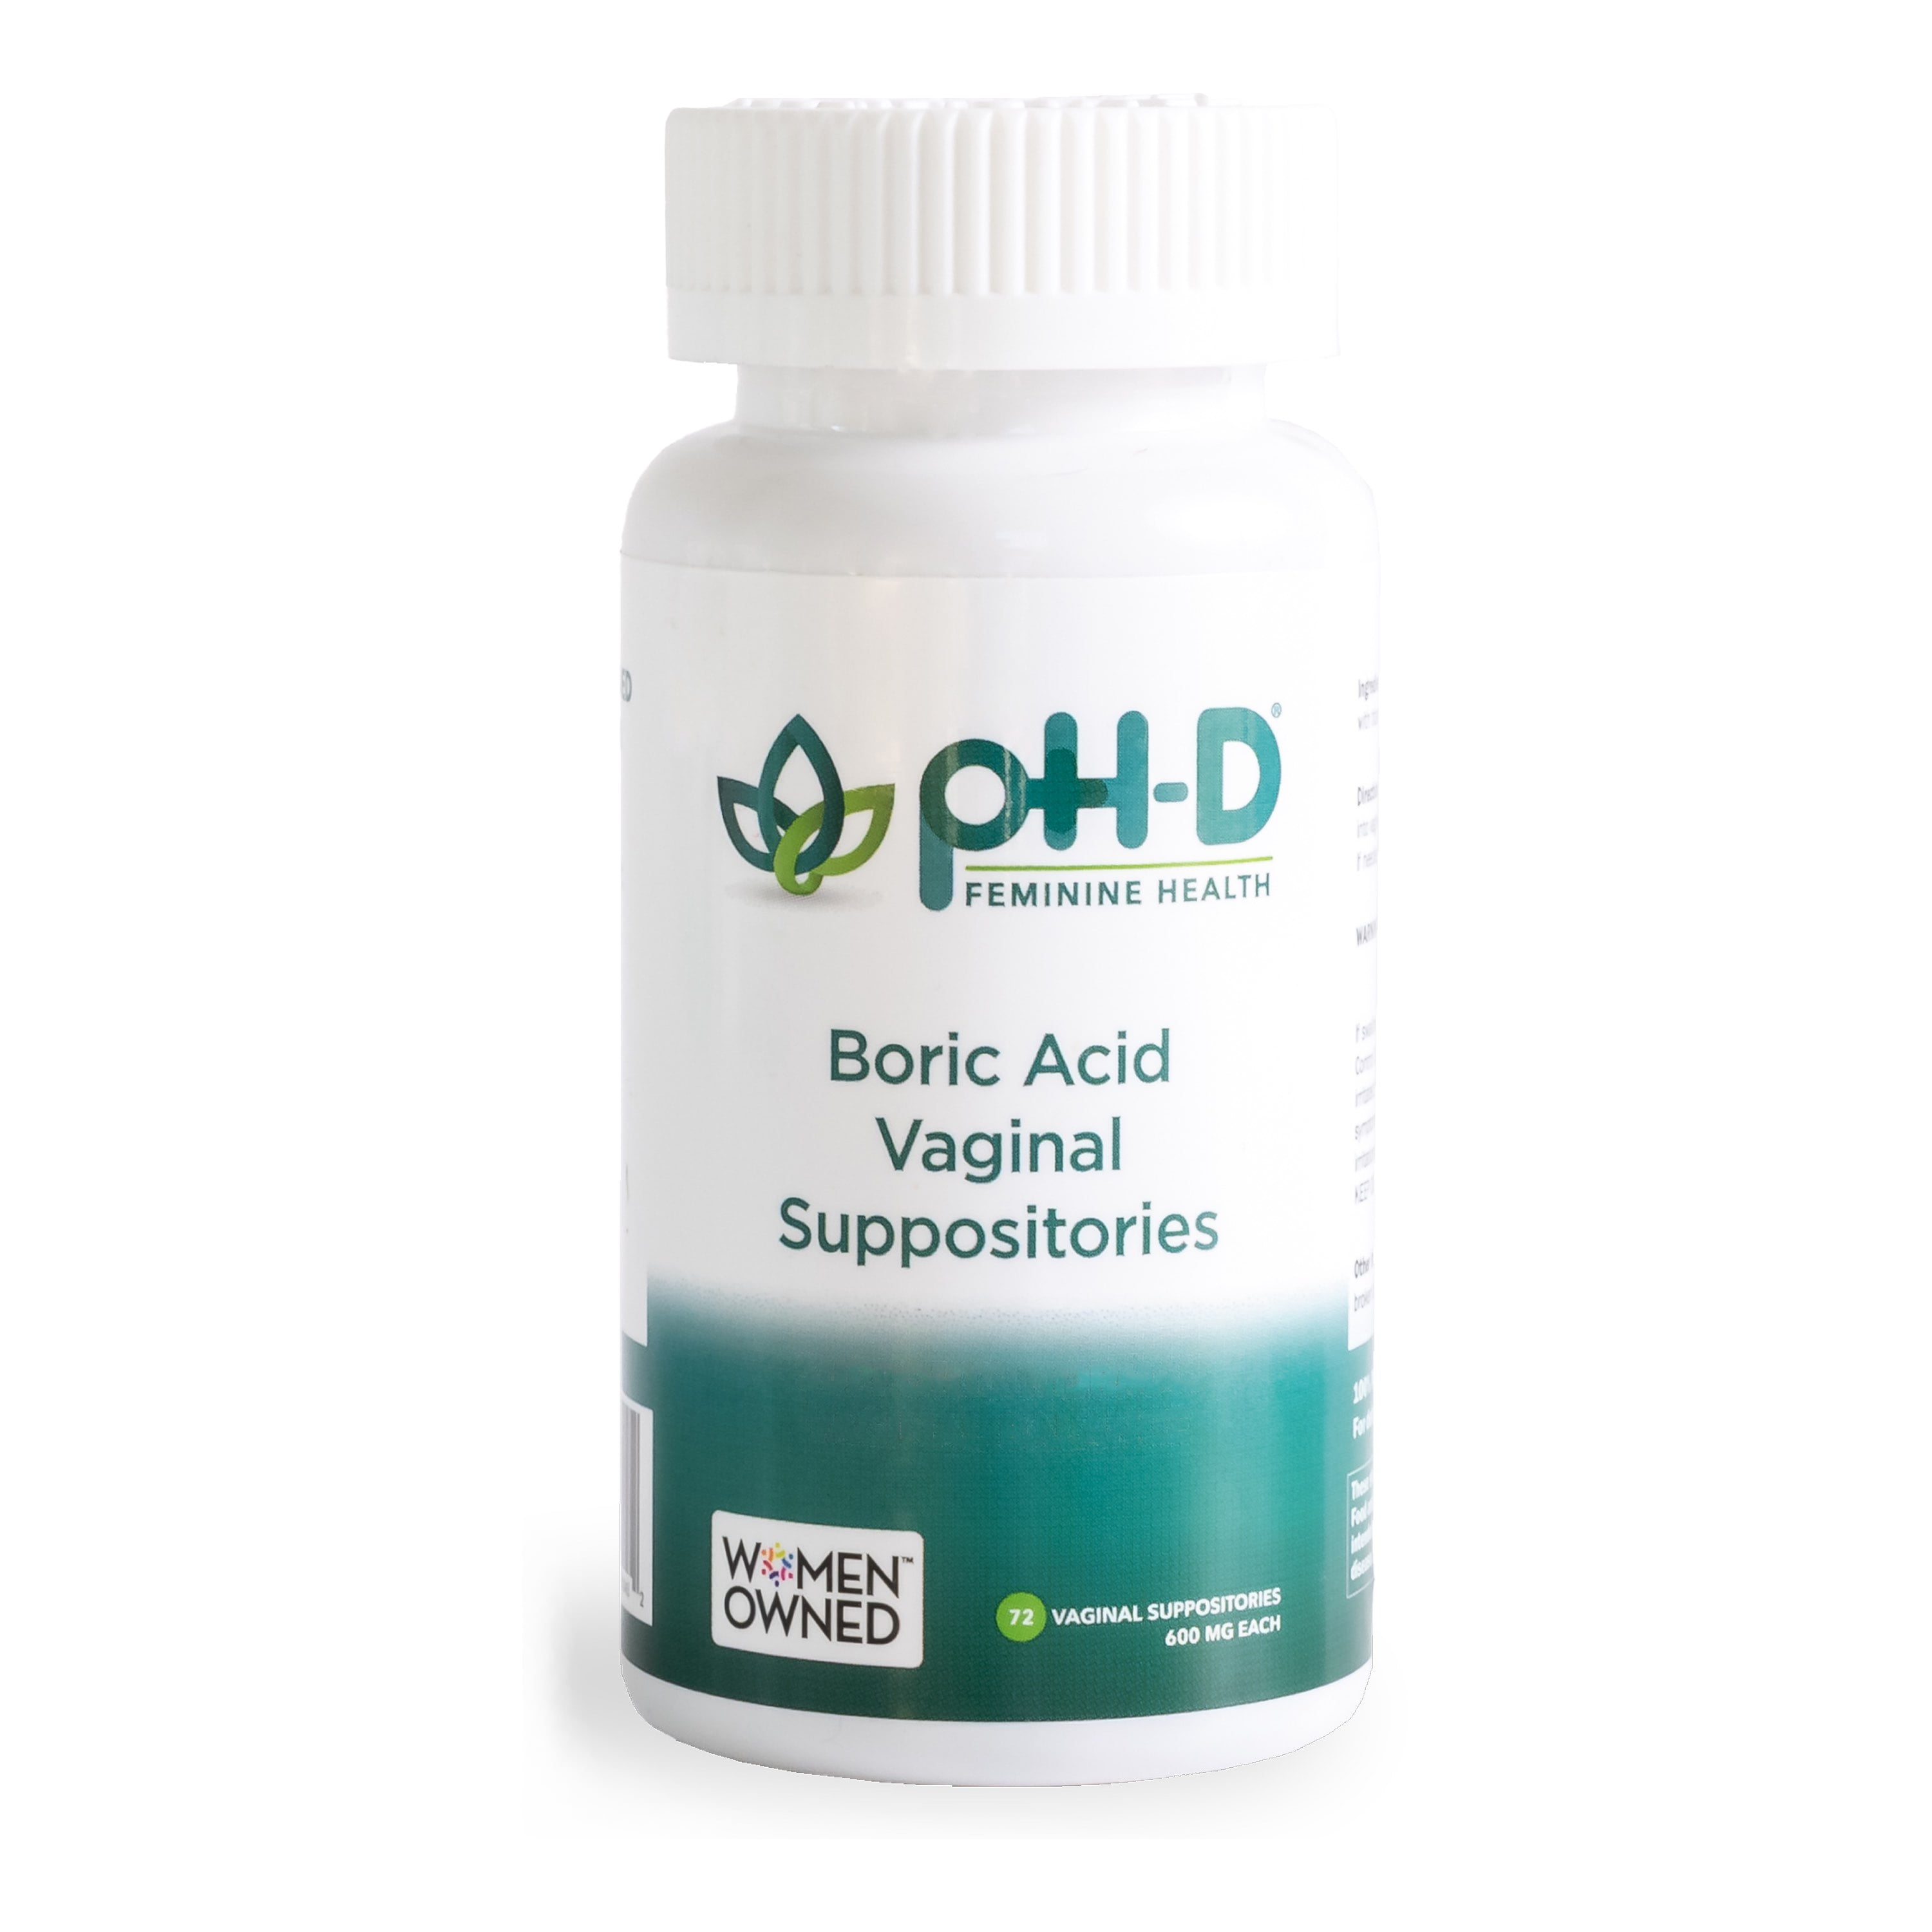 what is phd boric acid